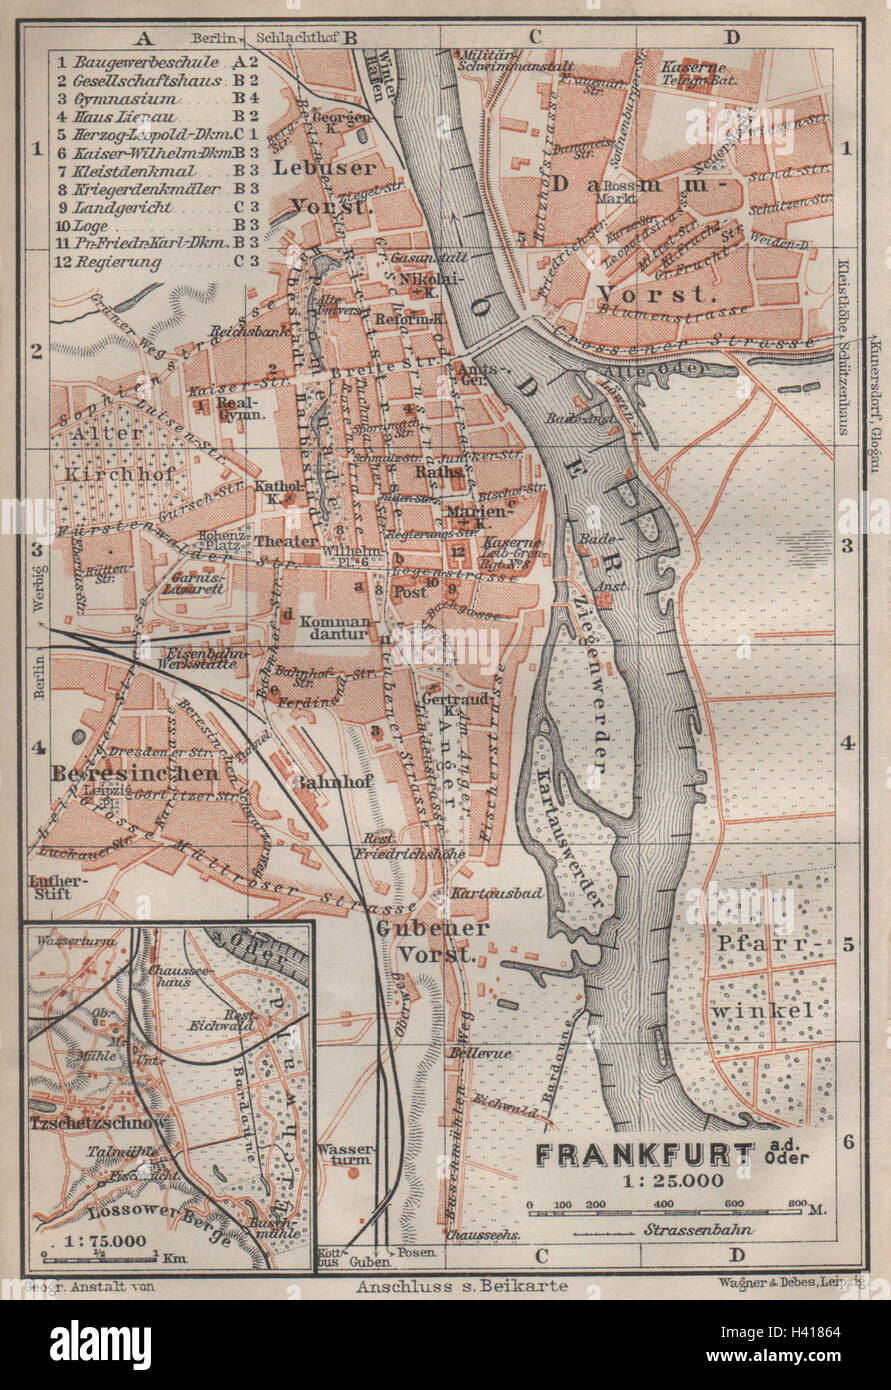 FRANKFURT AN DER ODER antique town city stadtplan. Hessen karte 1910 old map Stock Photo